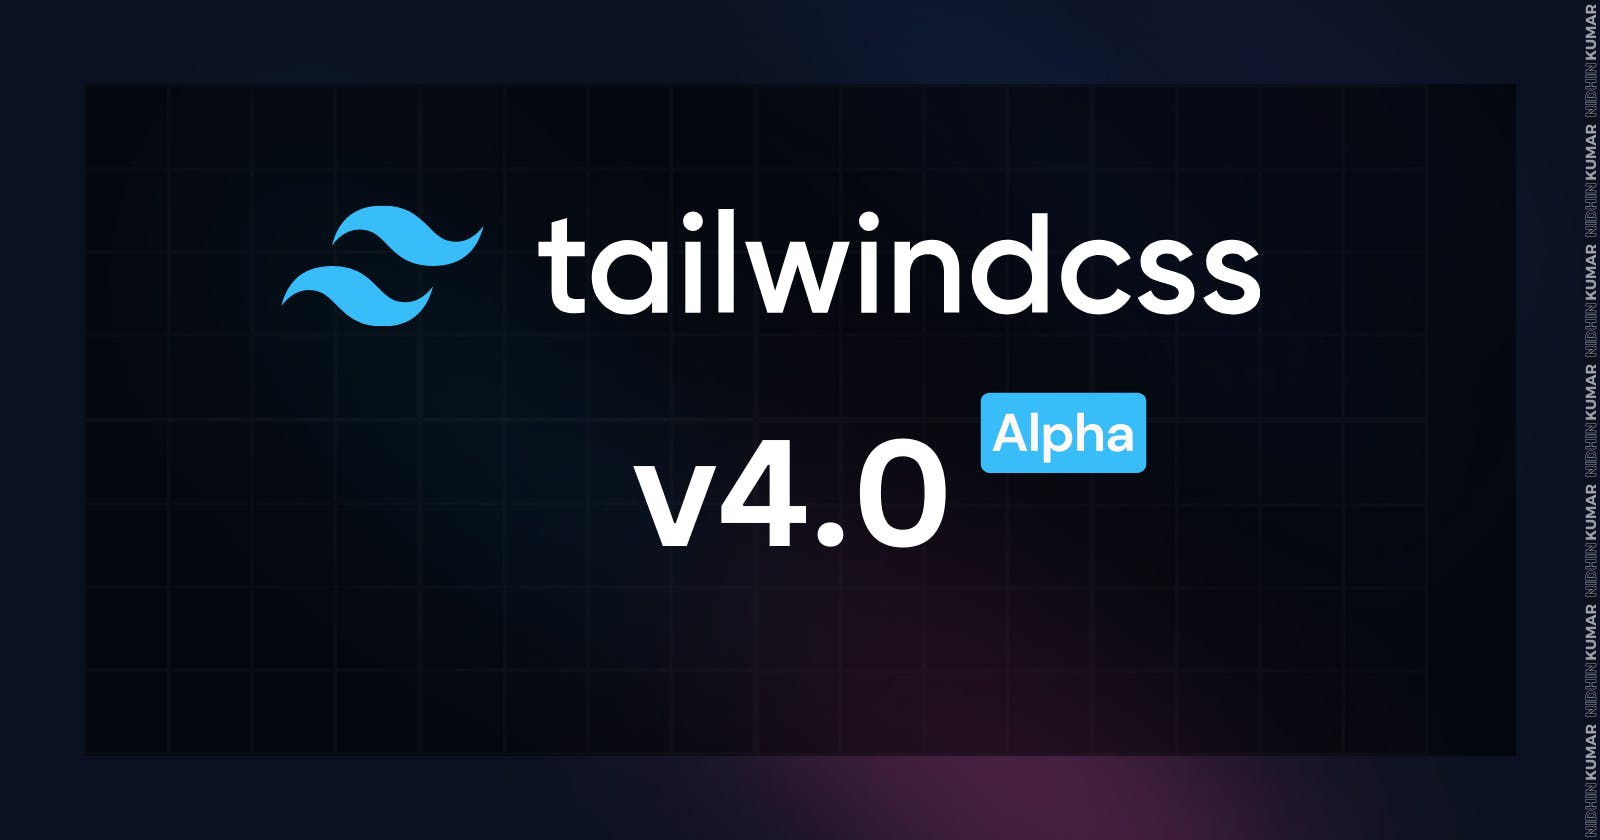 Tailwind CSS v4.0 Alpha